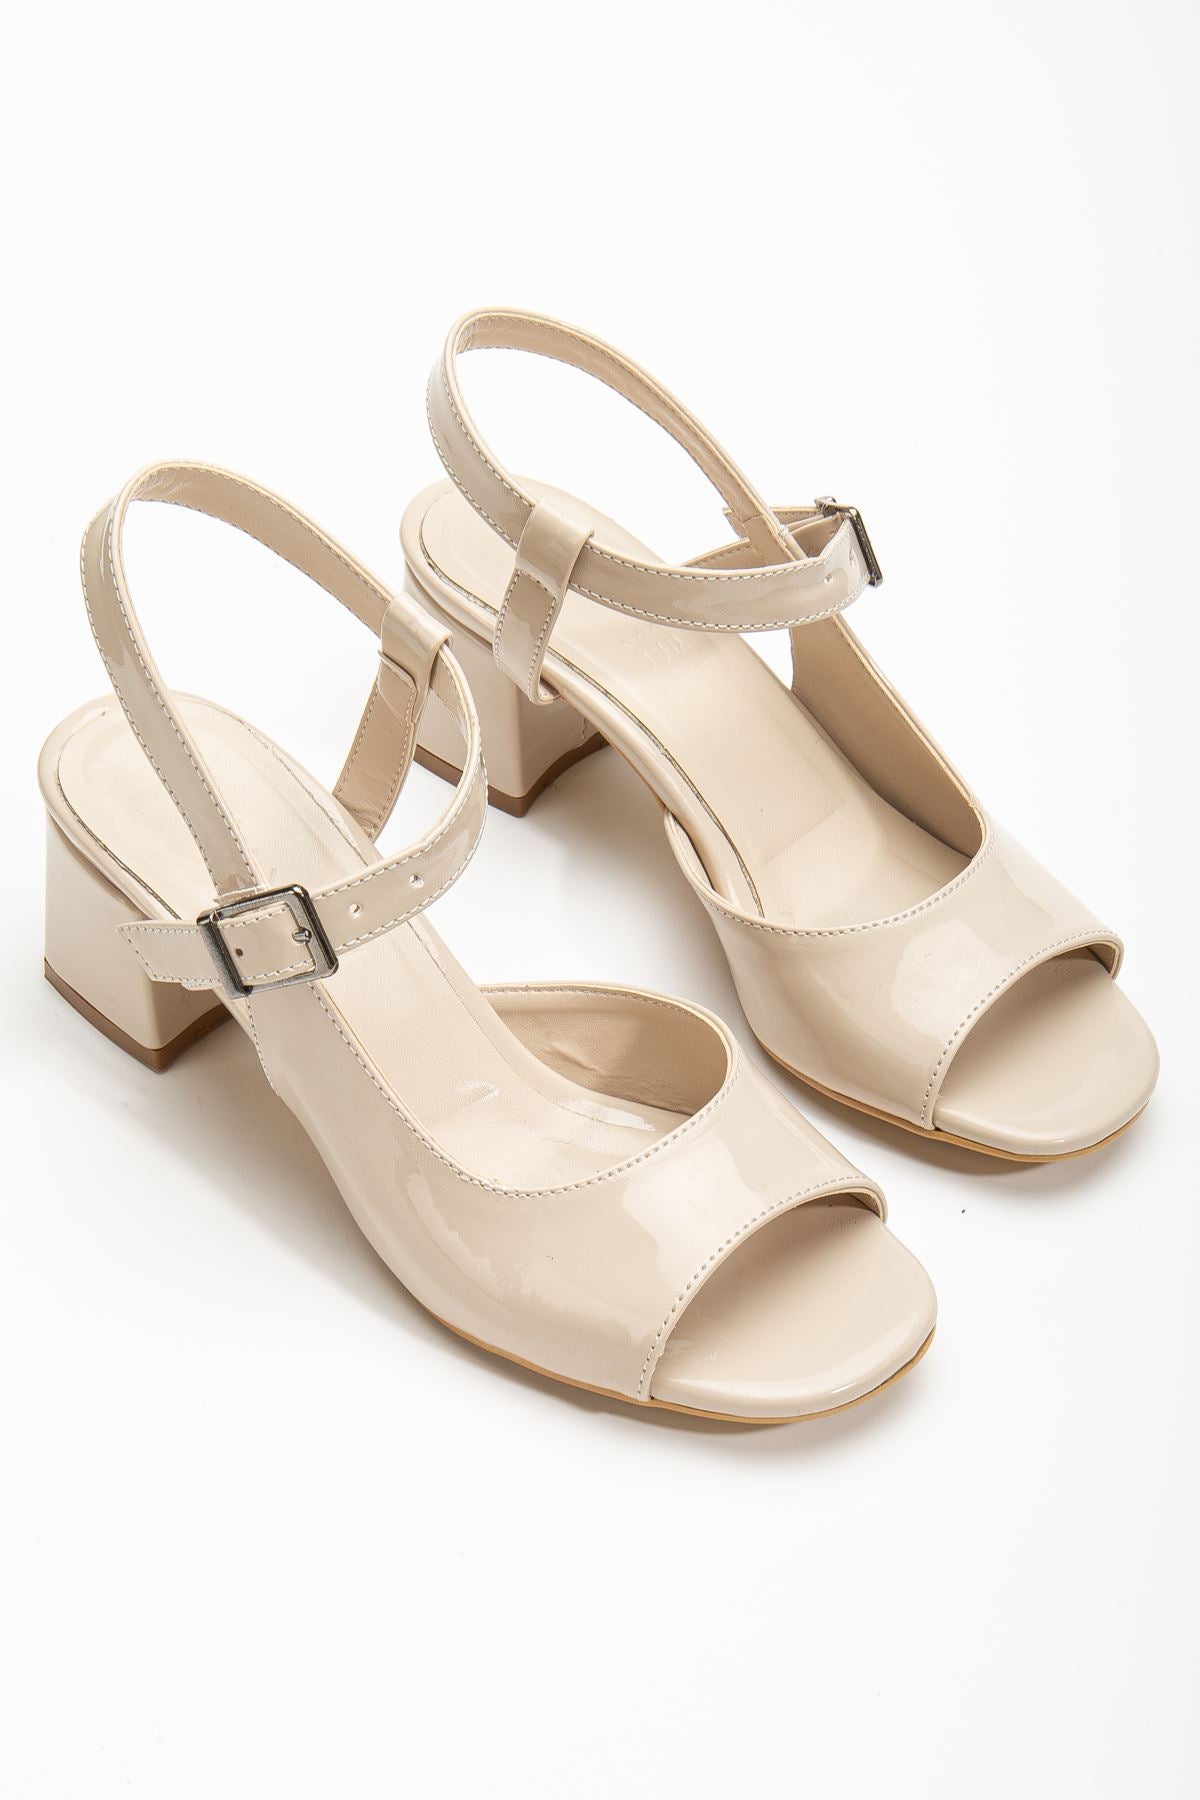 Keri Heeled Cream Patent Leather Blunt Toe Women's Shoes - STREETMODE™